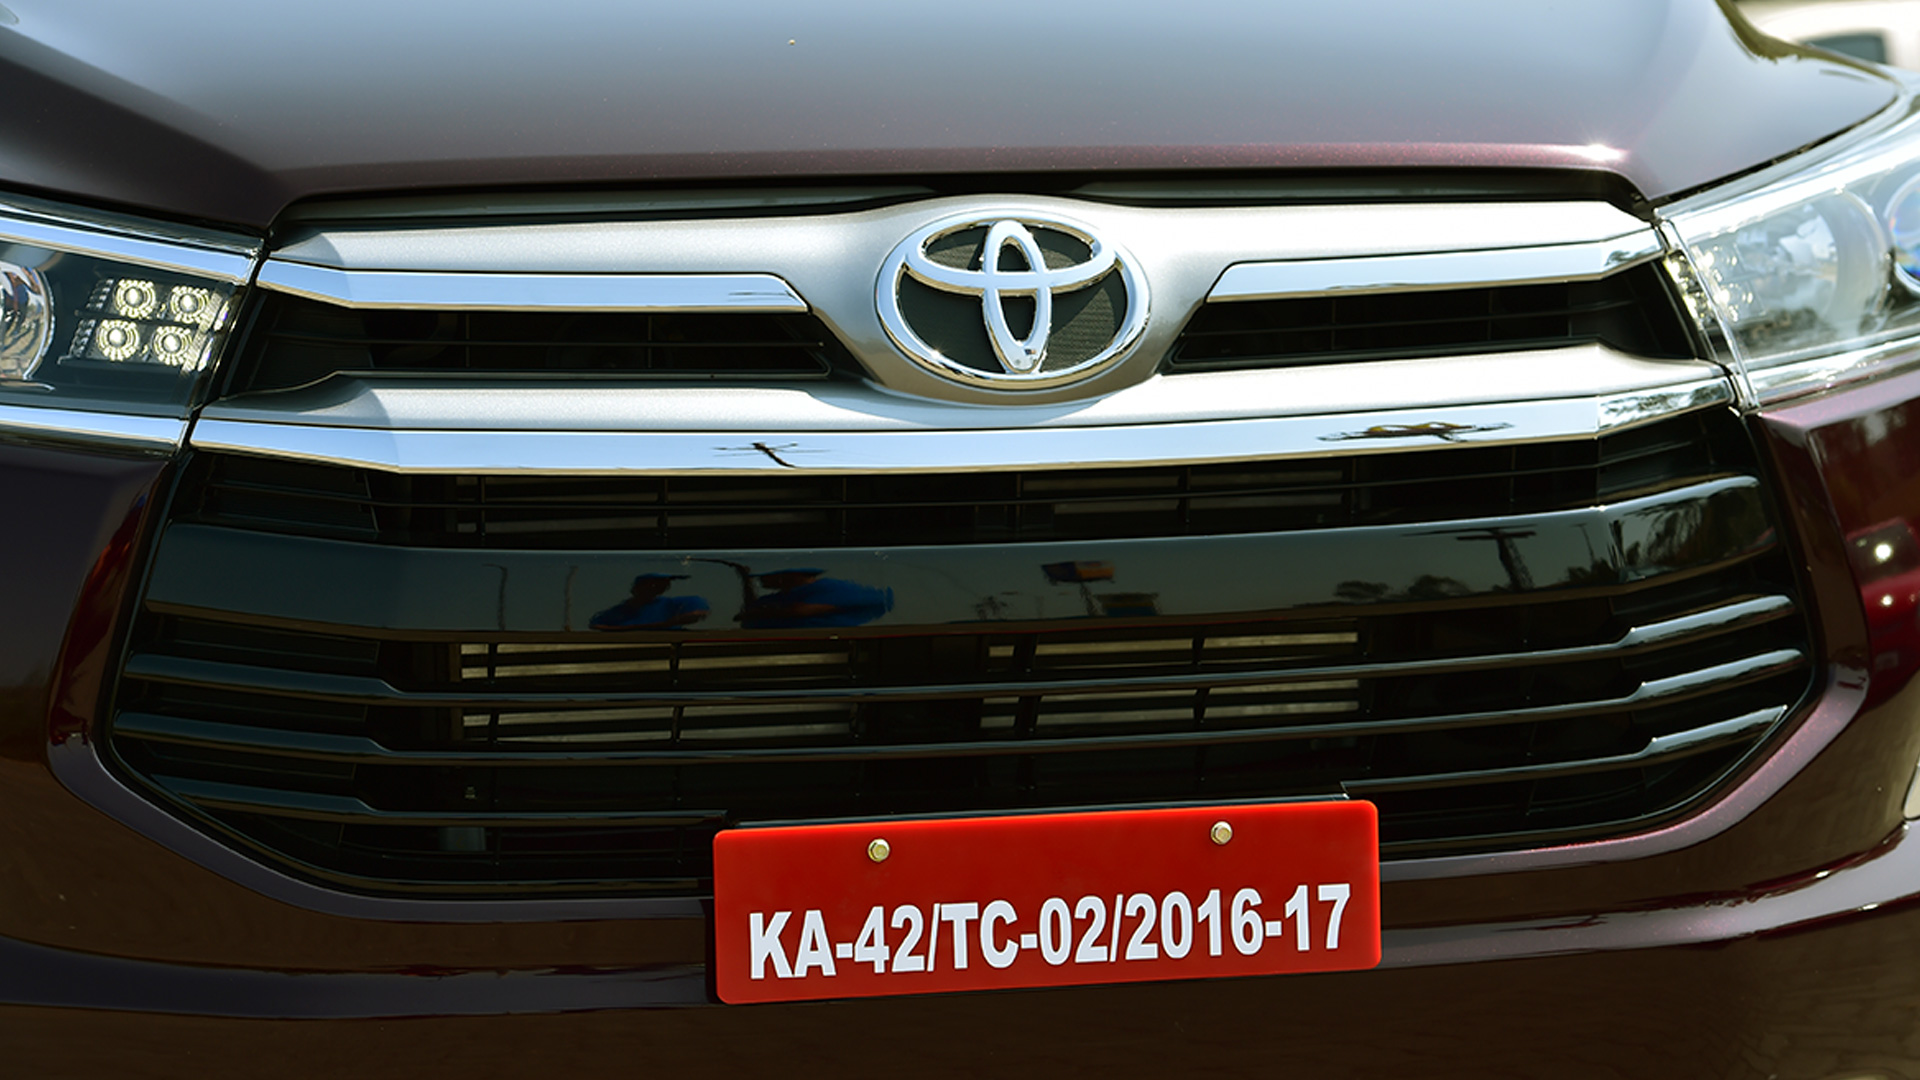 Toyota Innova Crysta 2016 STD Exterior